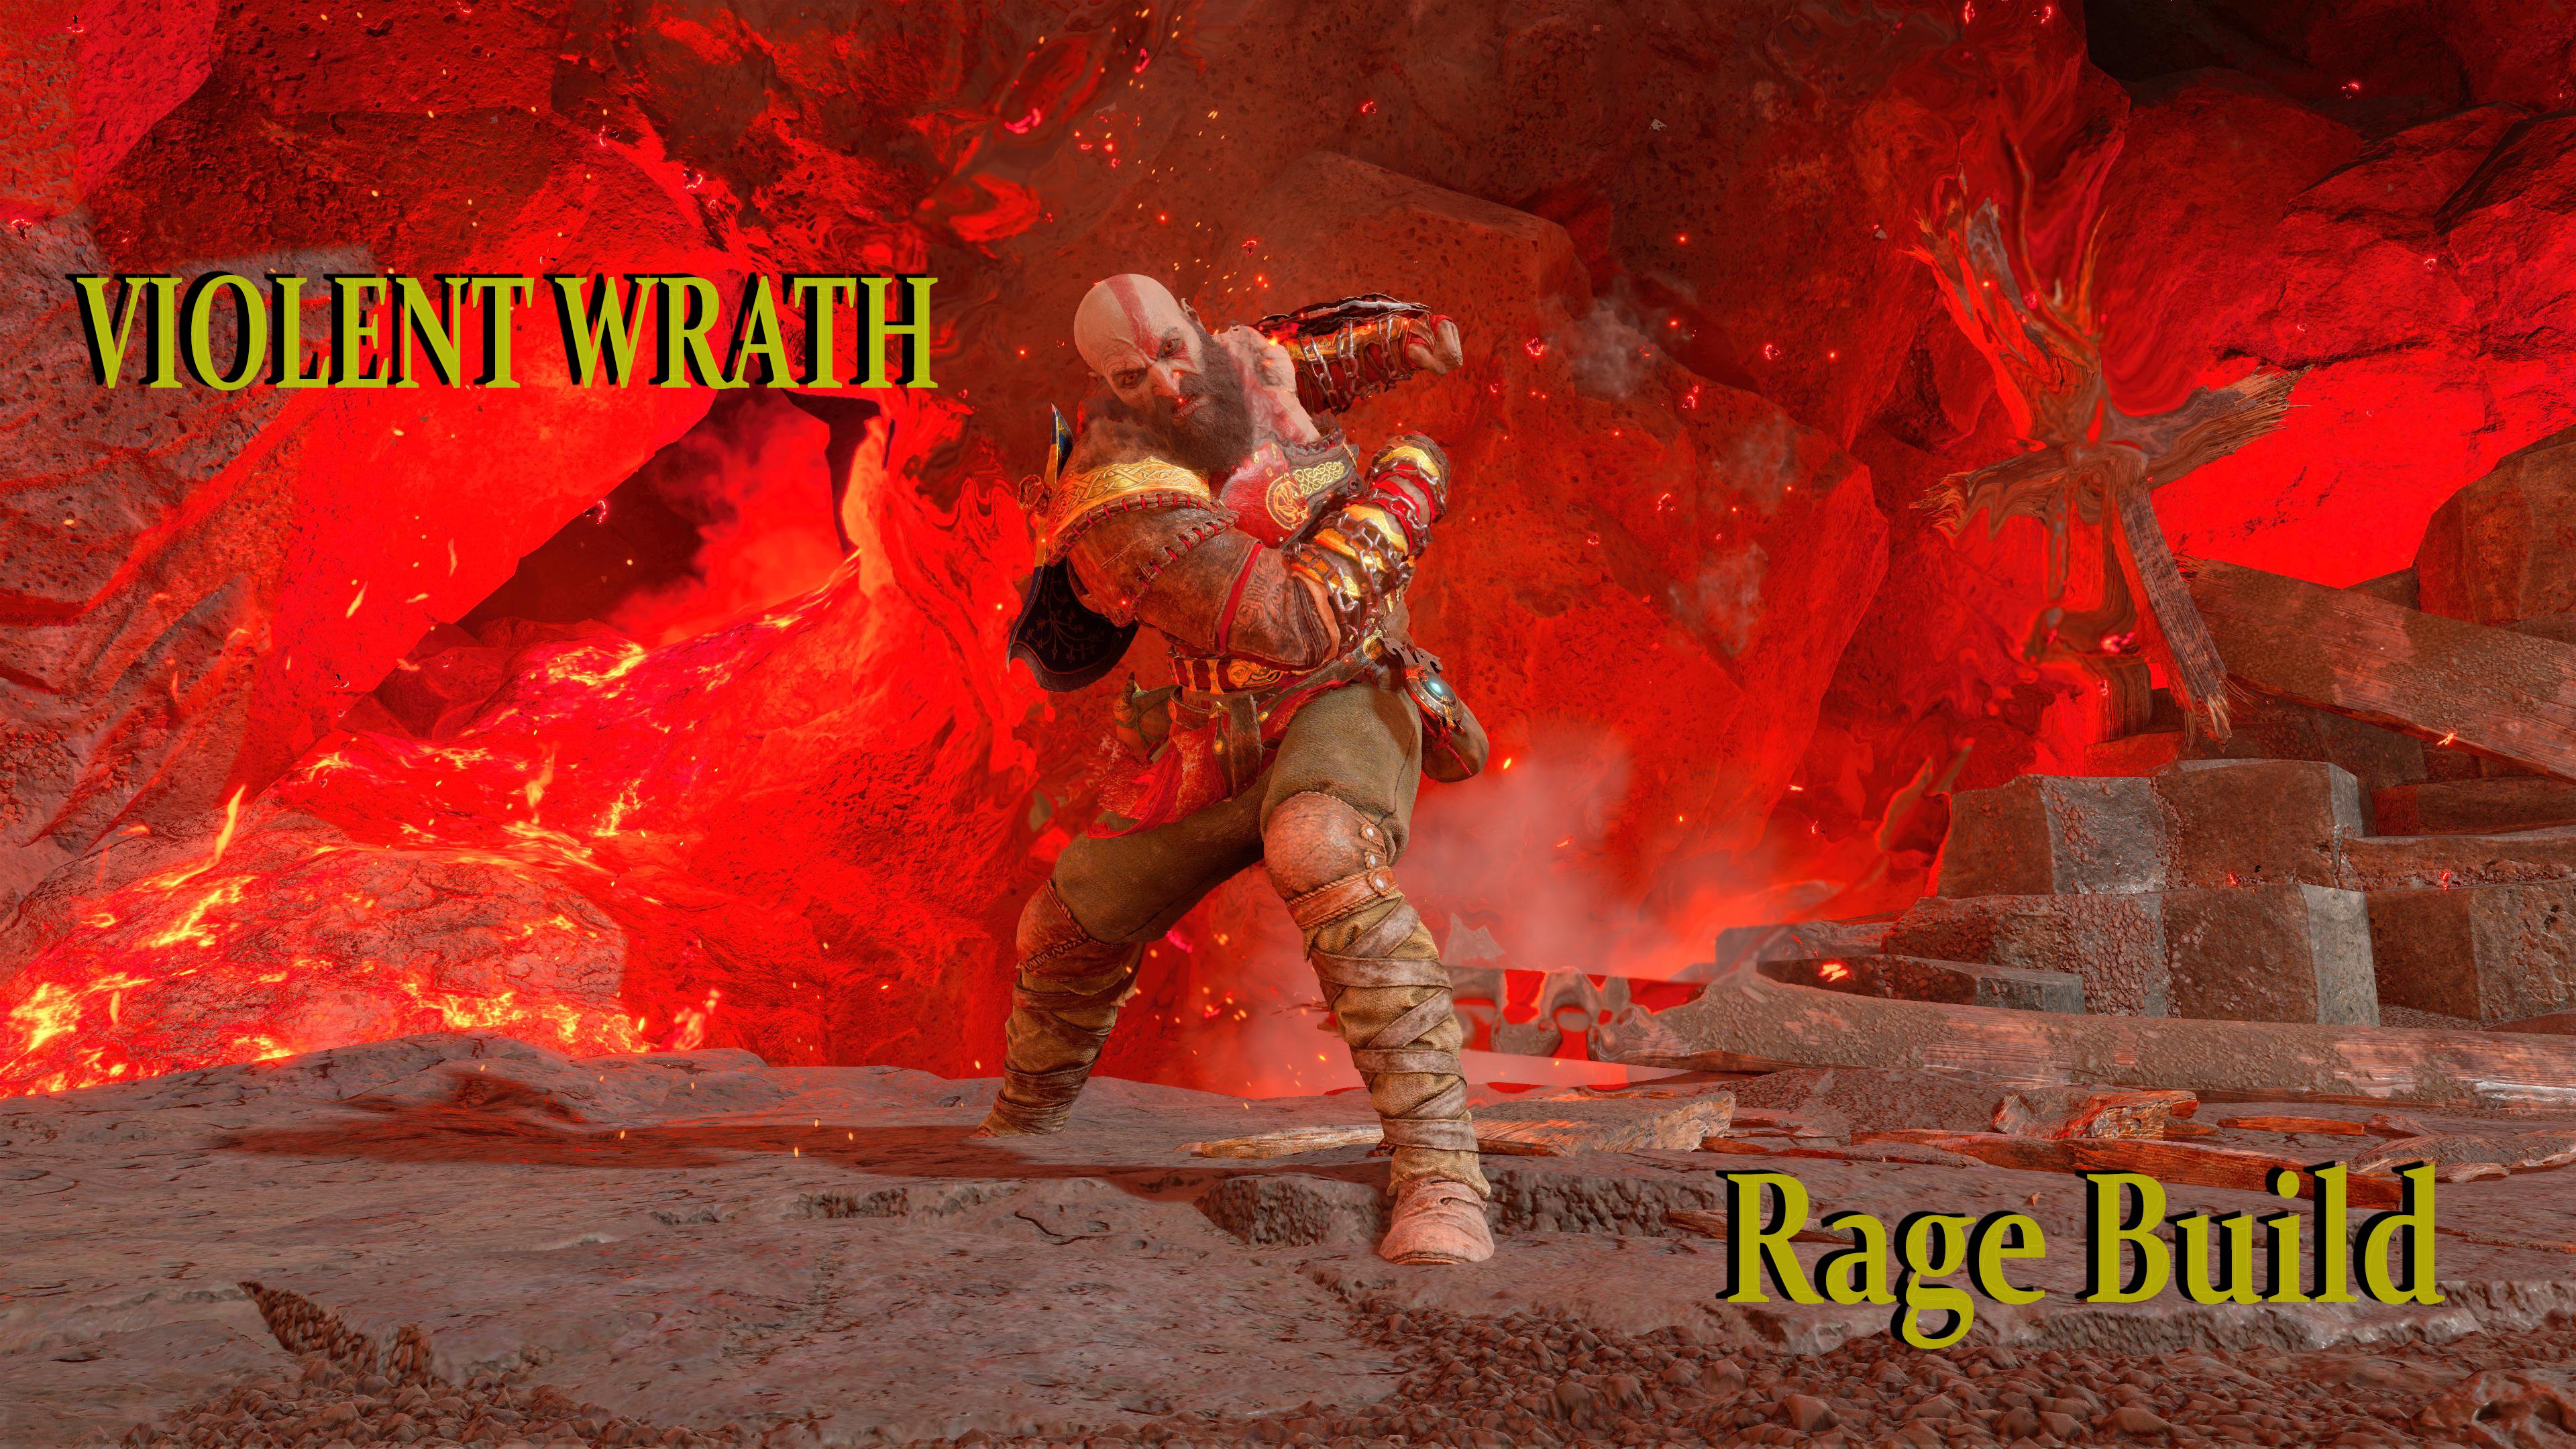 How To Build & Use Spartan Rage In God Of War: Ragnarok